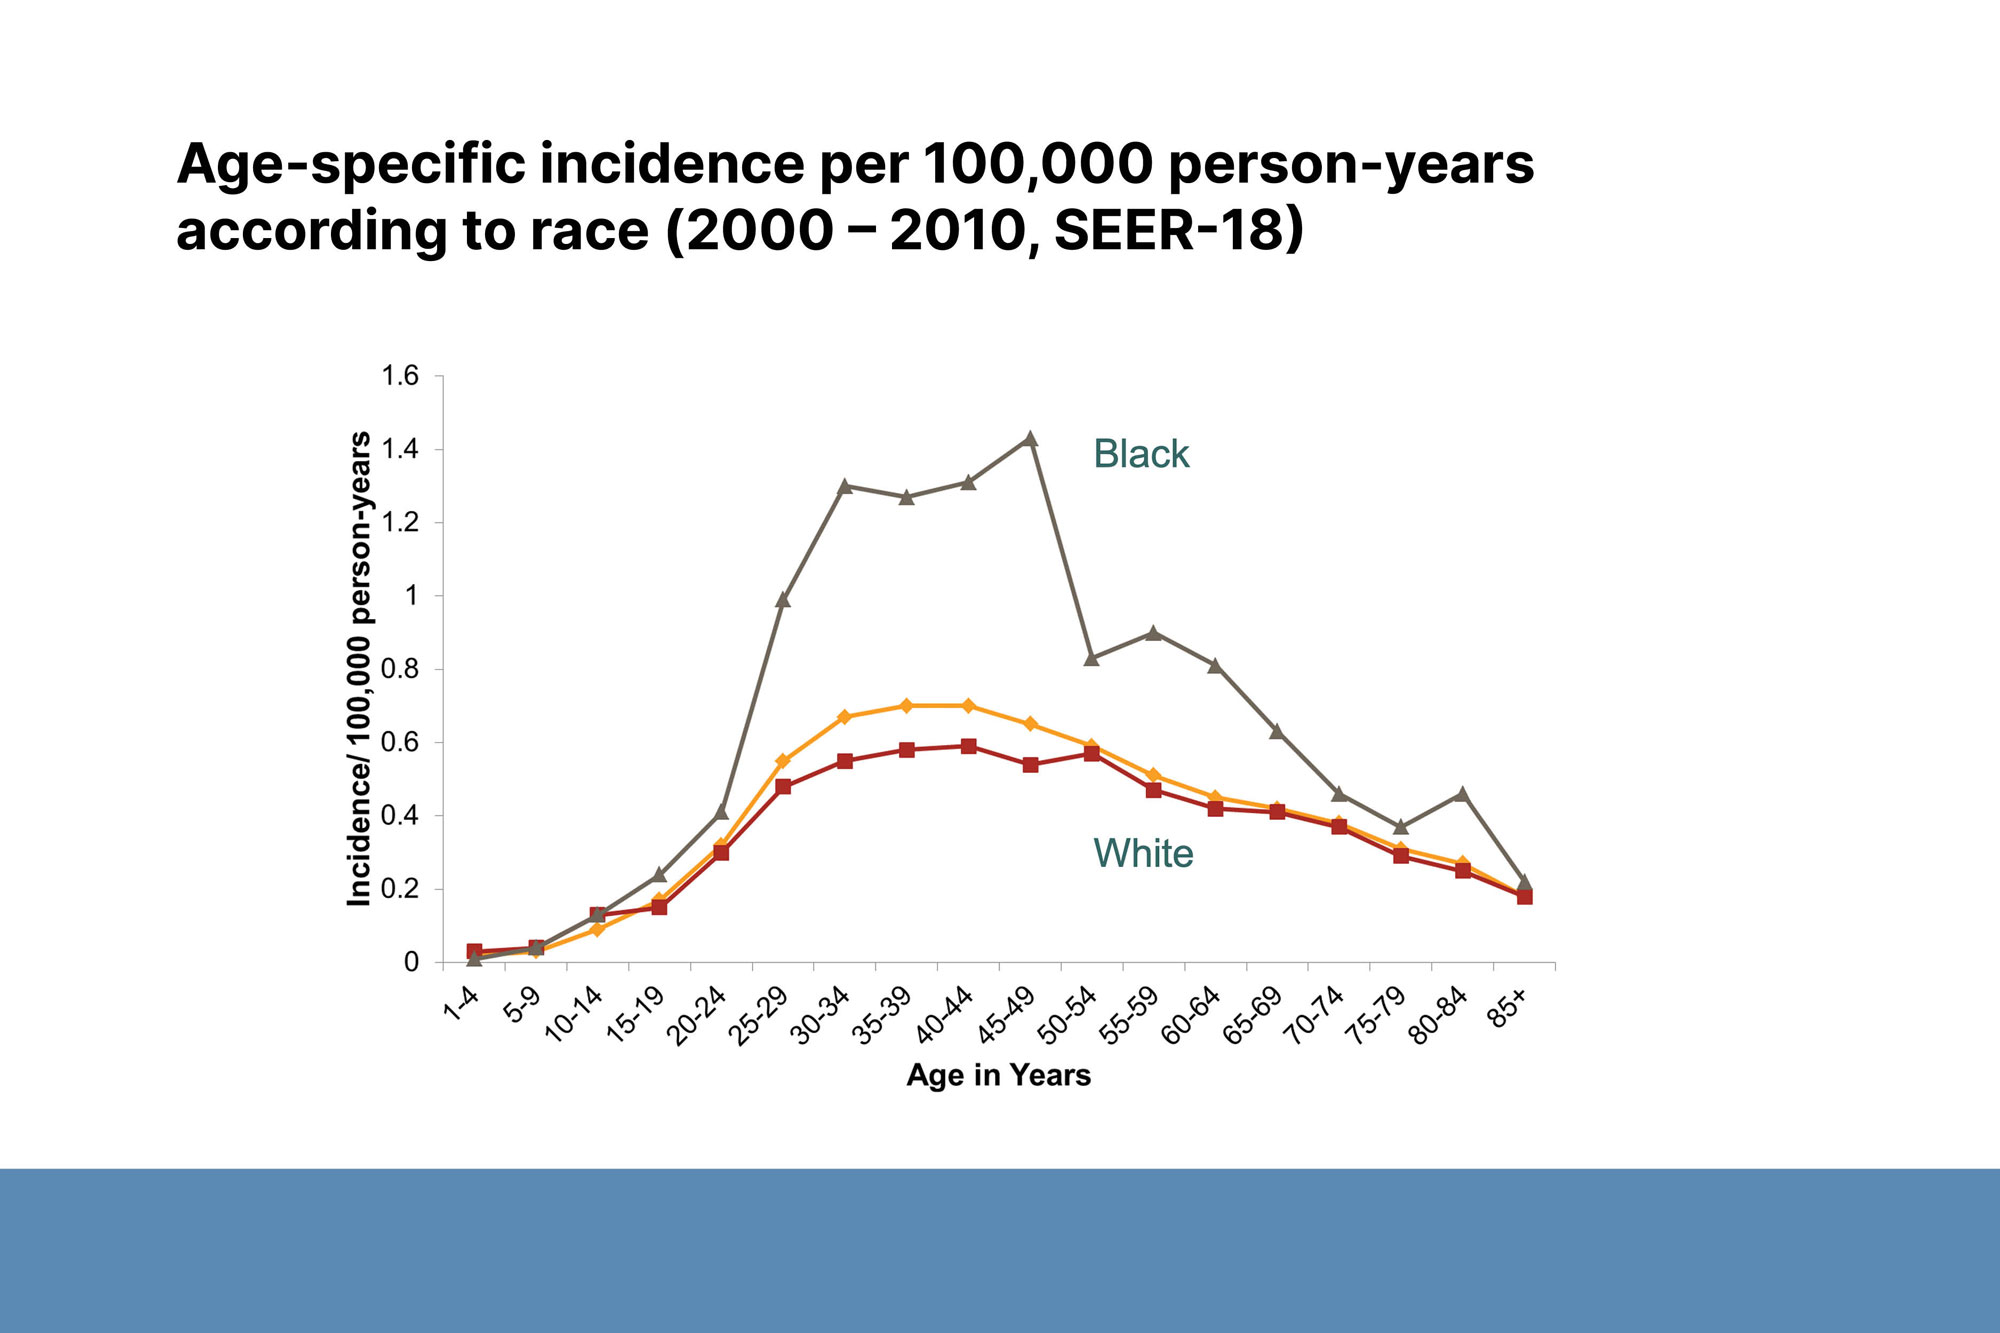 Data according to race